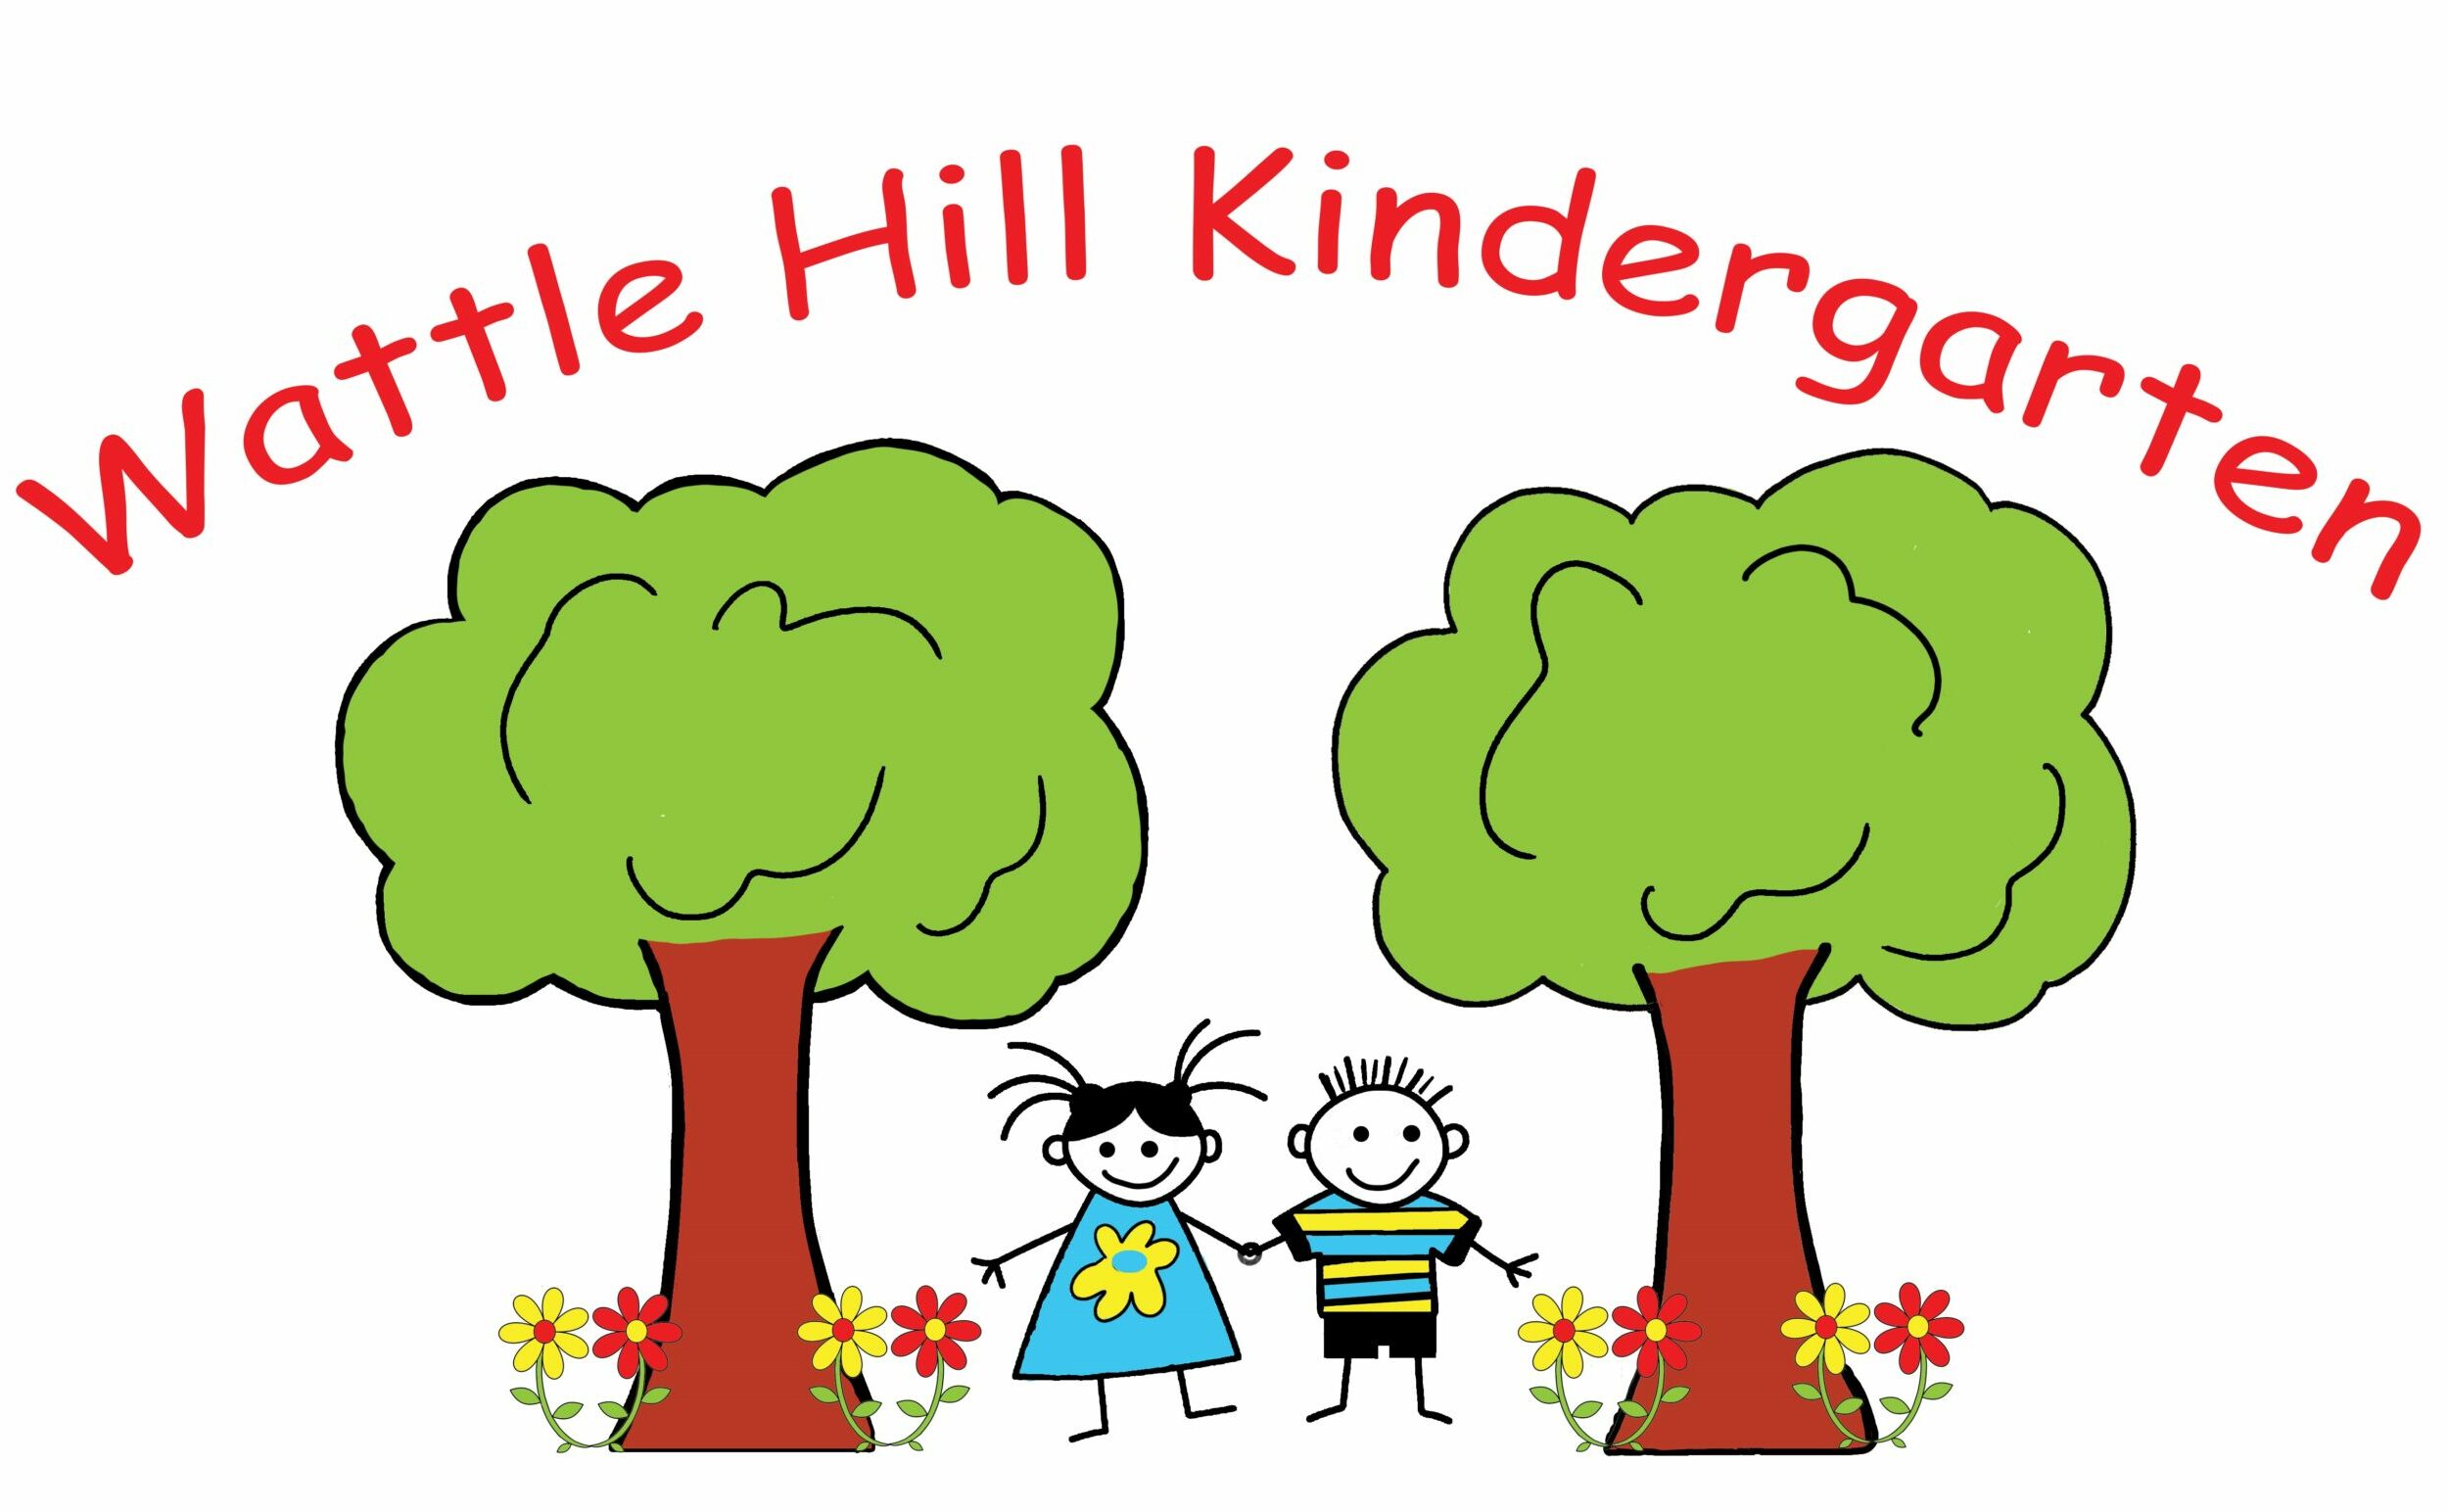 Wattle Hill Kindergarten